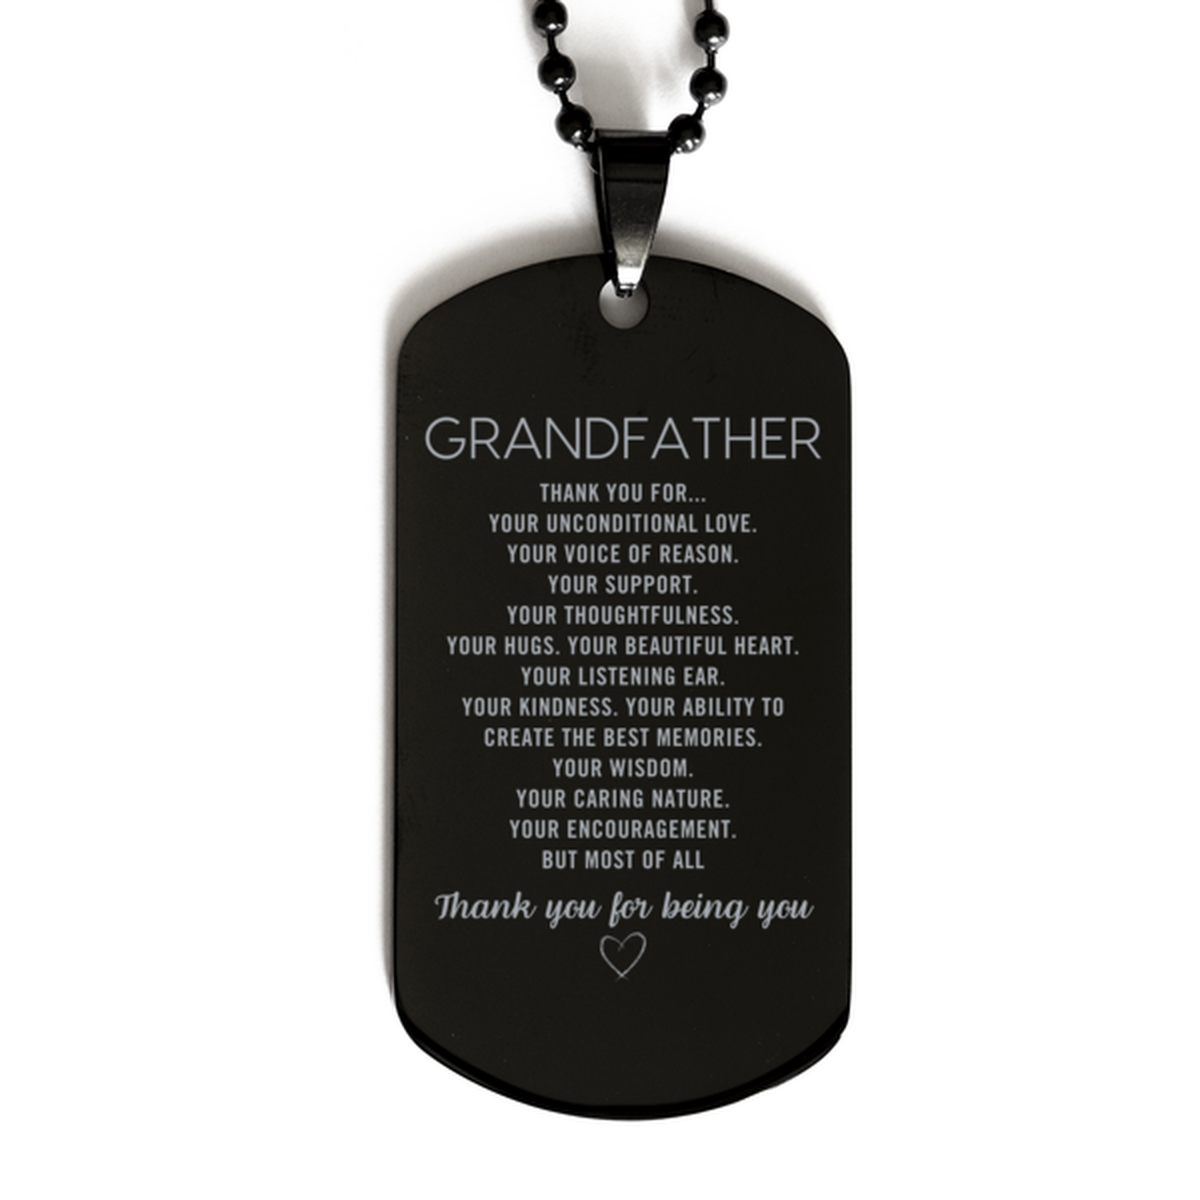 Grandfather Black Dog Tag Custom, Engraved Gifts For Grandfather Christmas Graduation Birthday Gifts for Men Women Grandfather Thank you for Your unconditional love